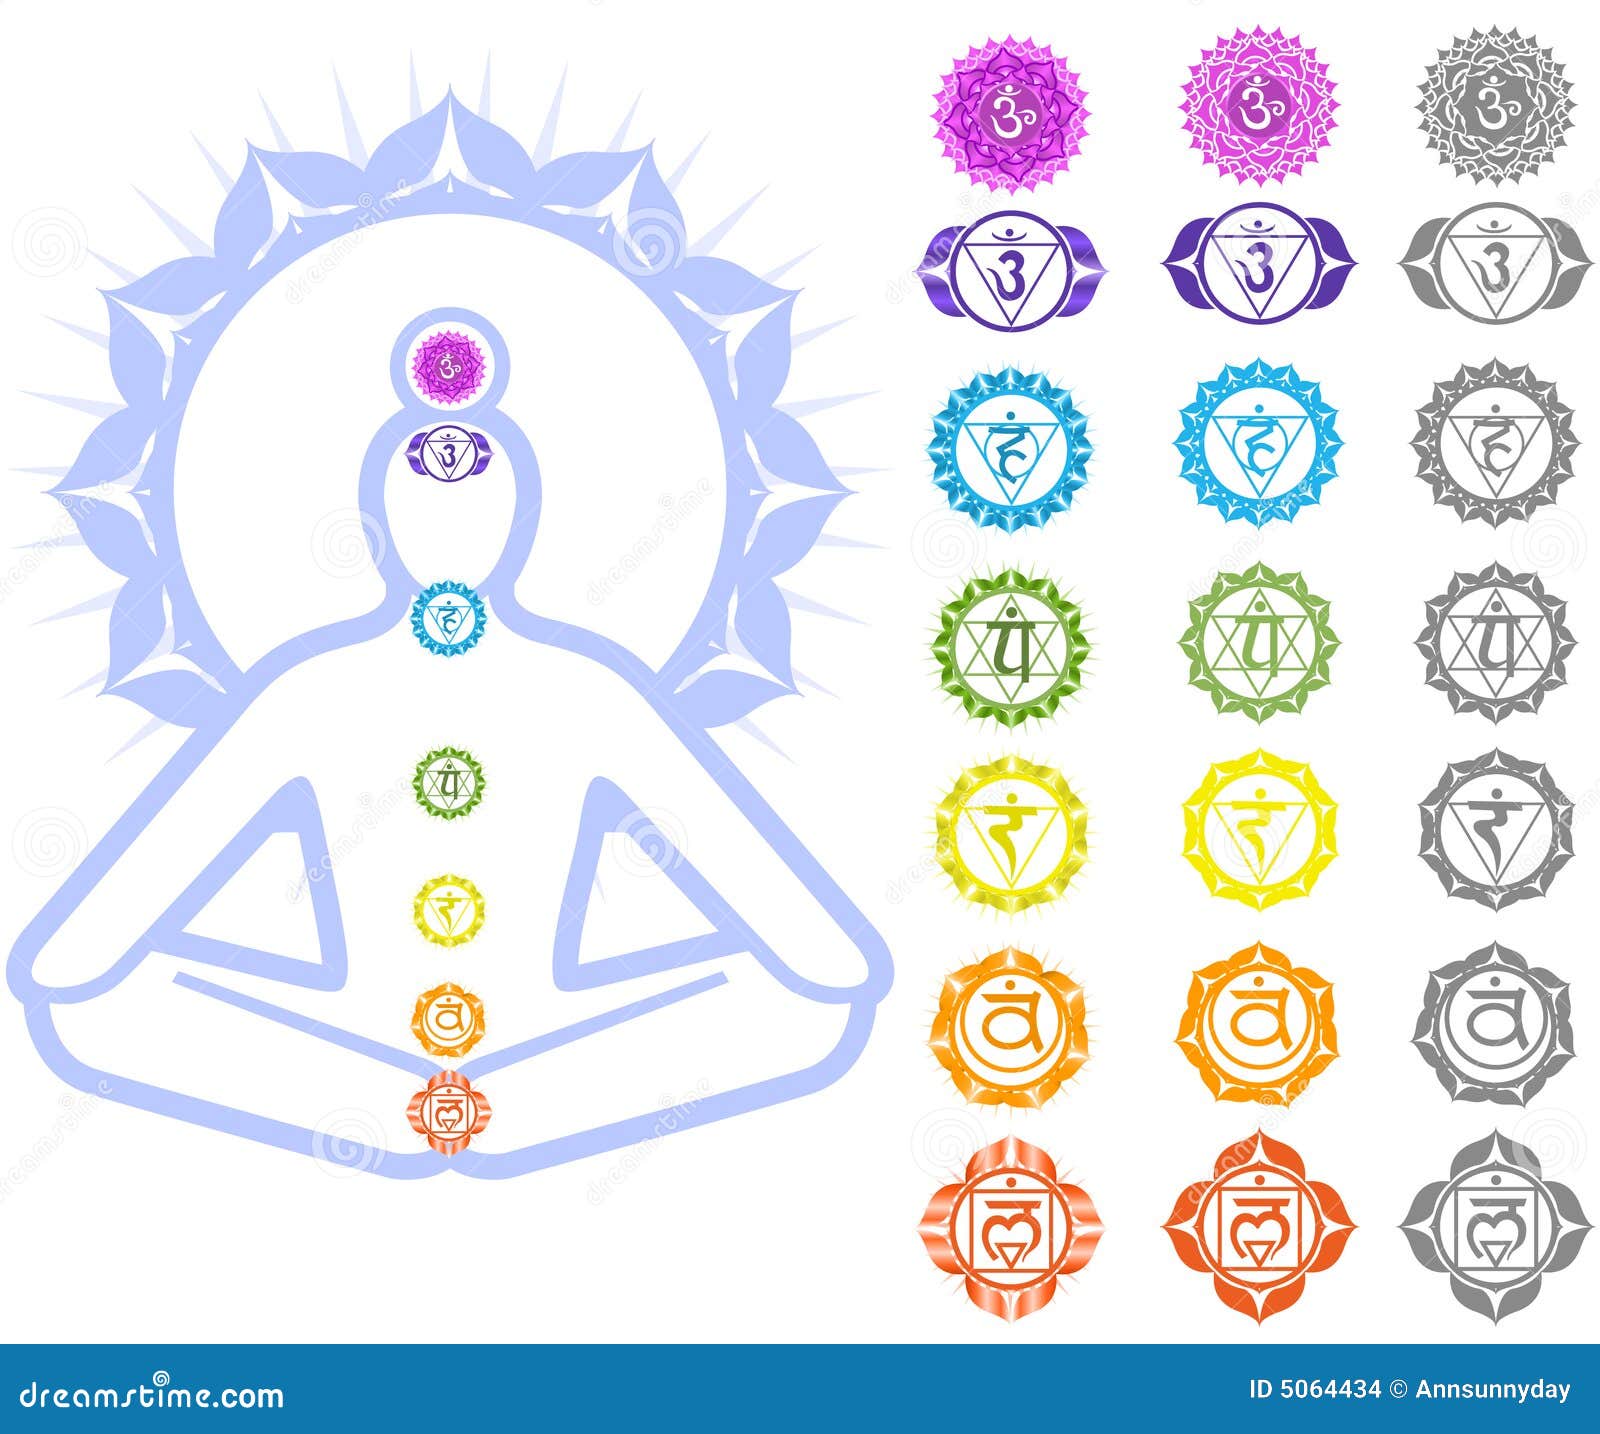 Illustration Containing The Seven Chakra Symbols Spiritual Tattoo Designs  With Meaning Chakra Symbols Stockvectorkunst en meer beelden van Chakra -  iStock